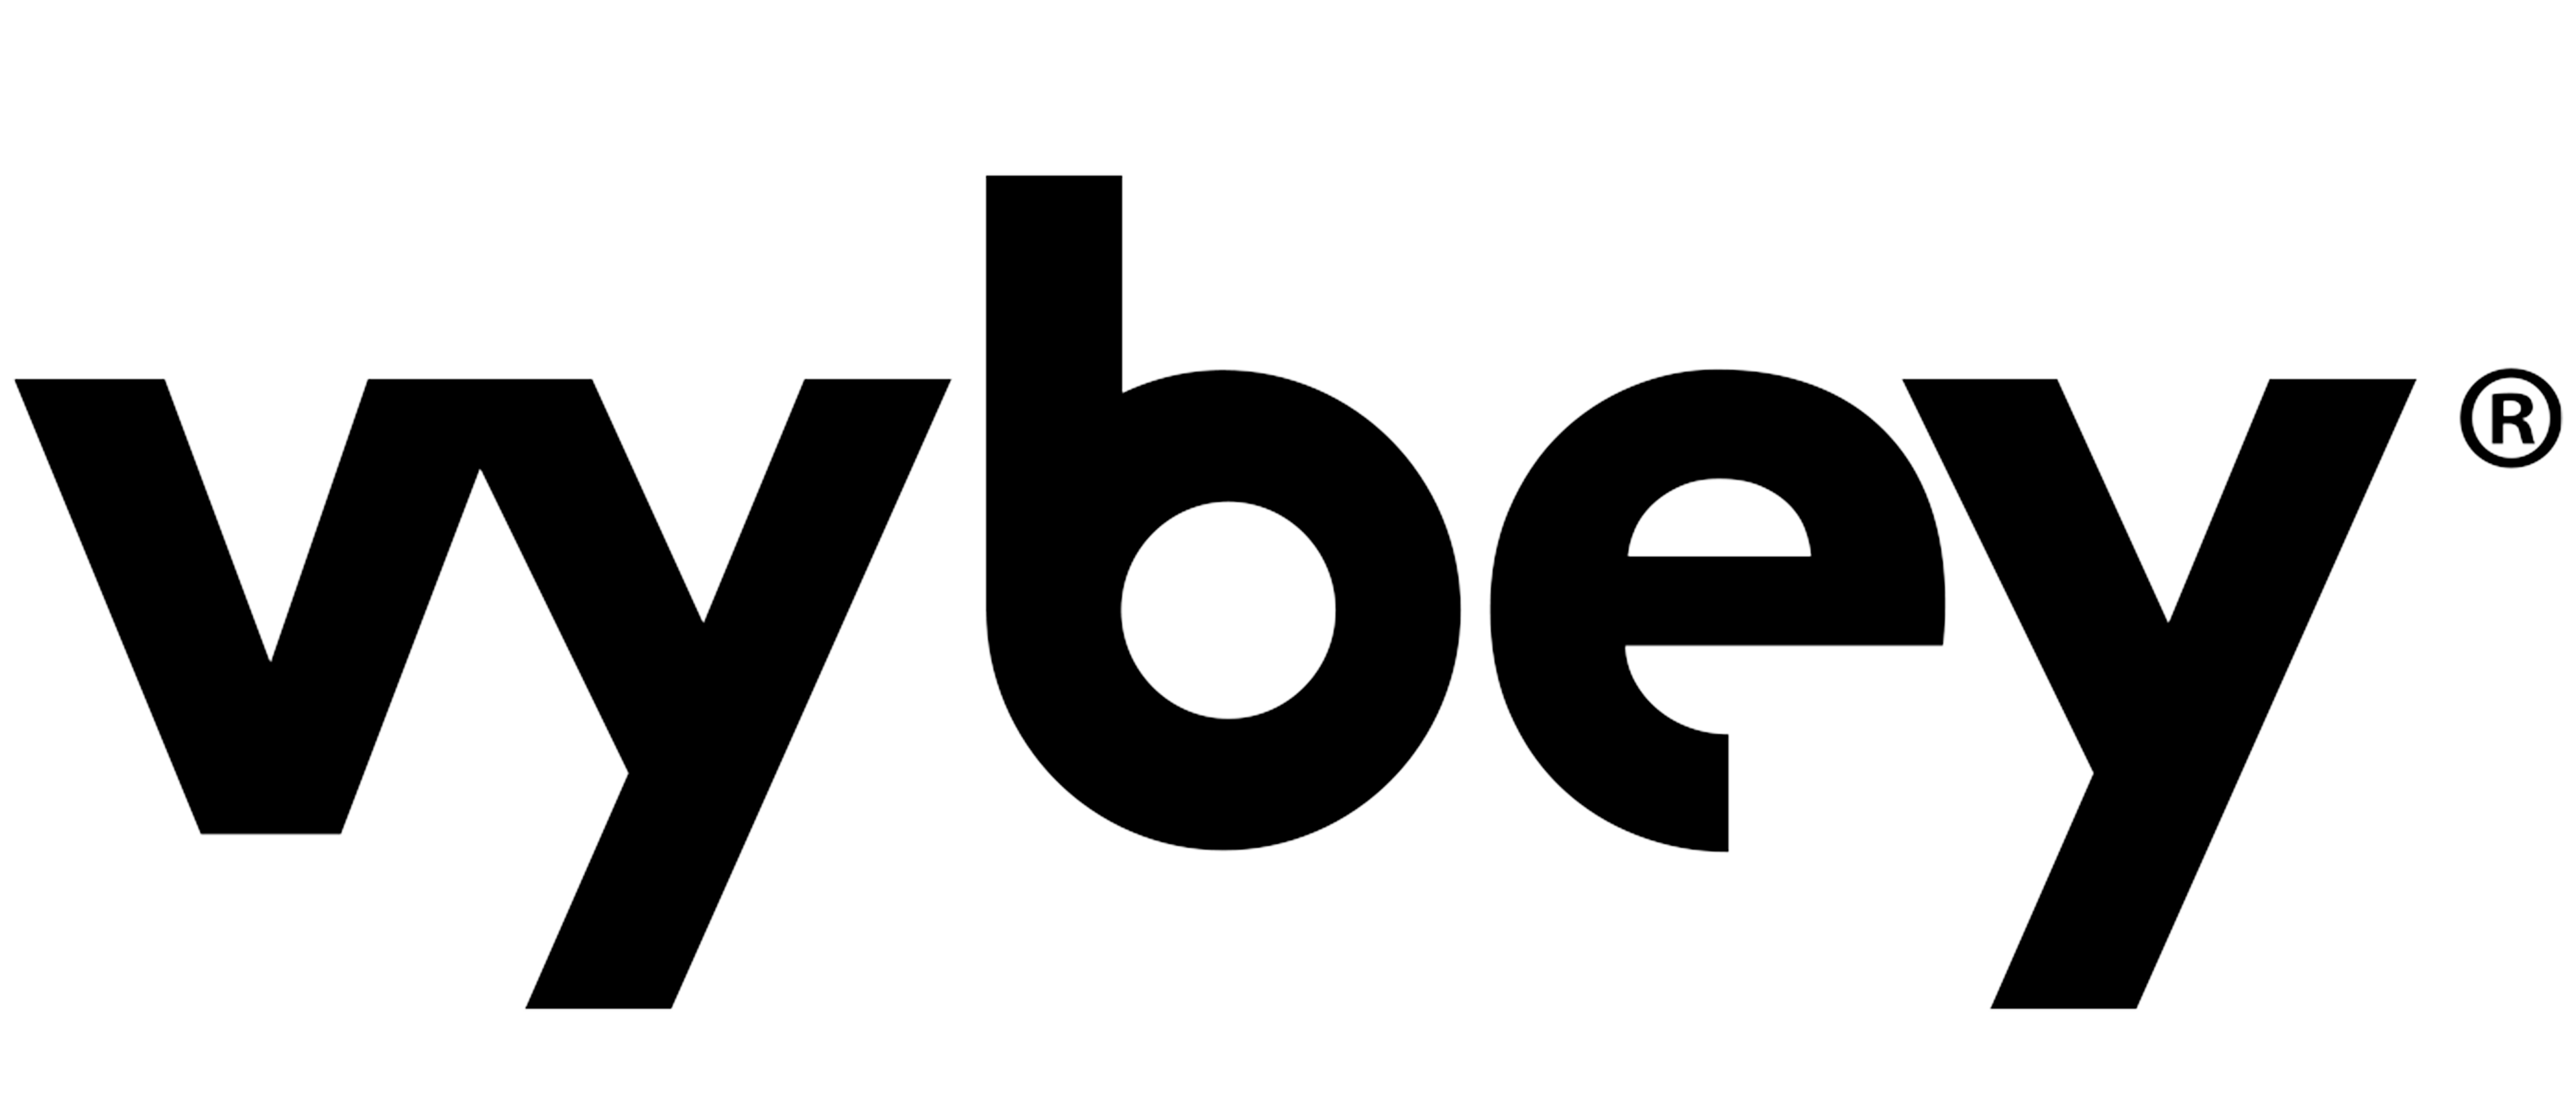 Vybey logo